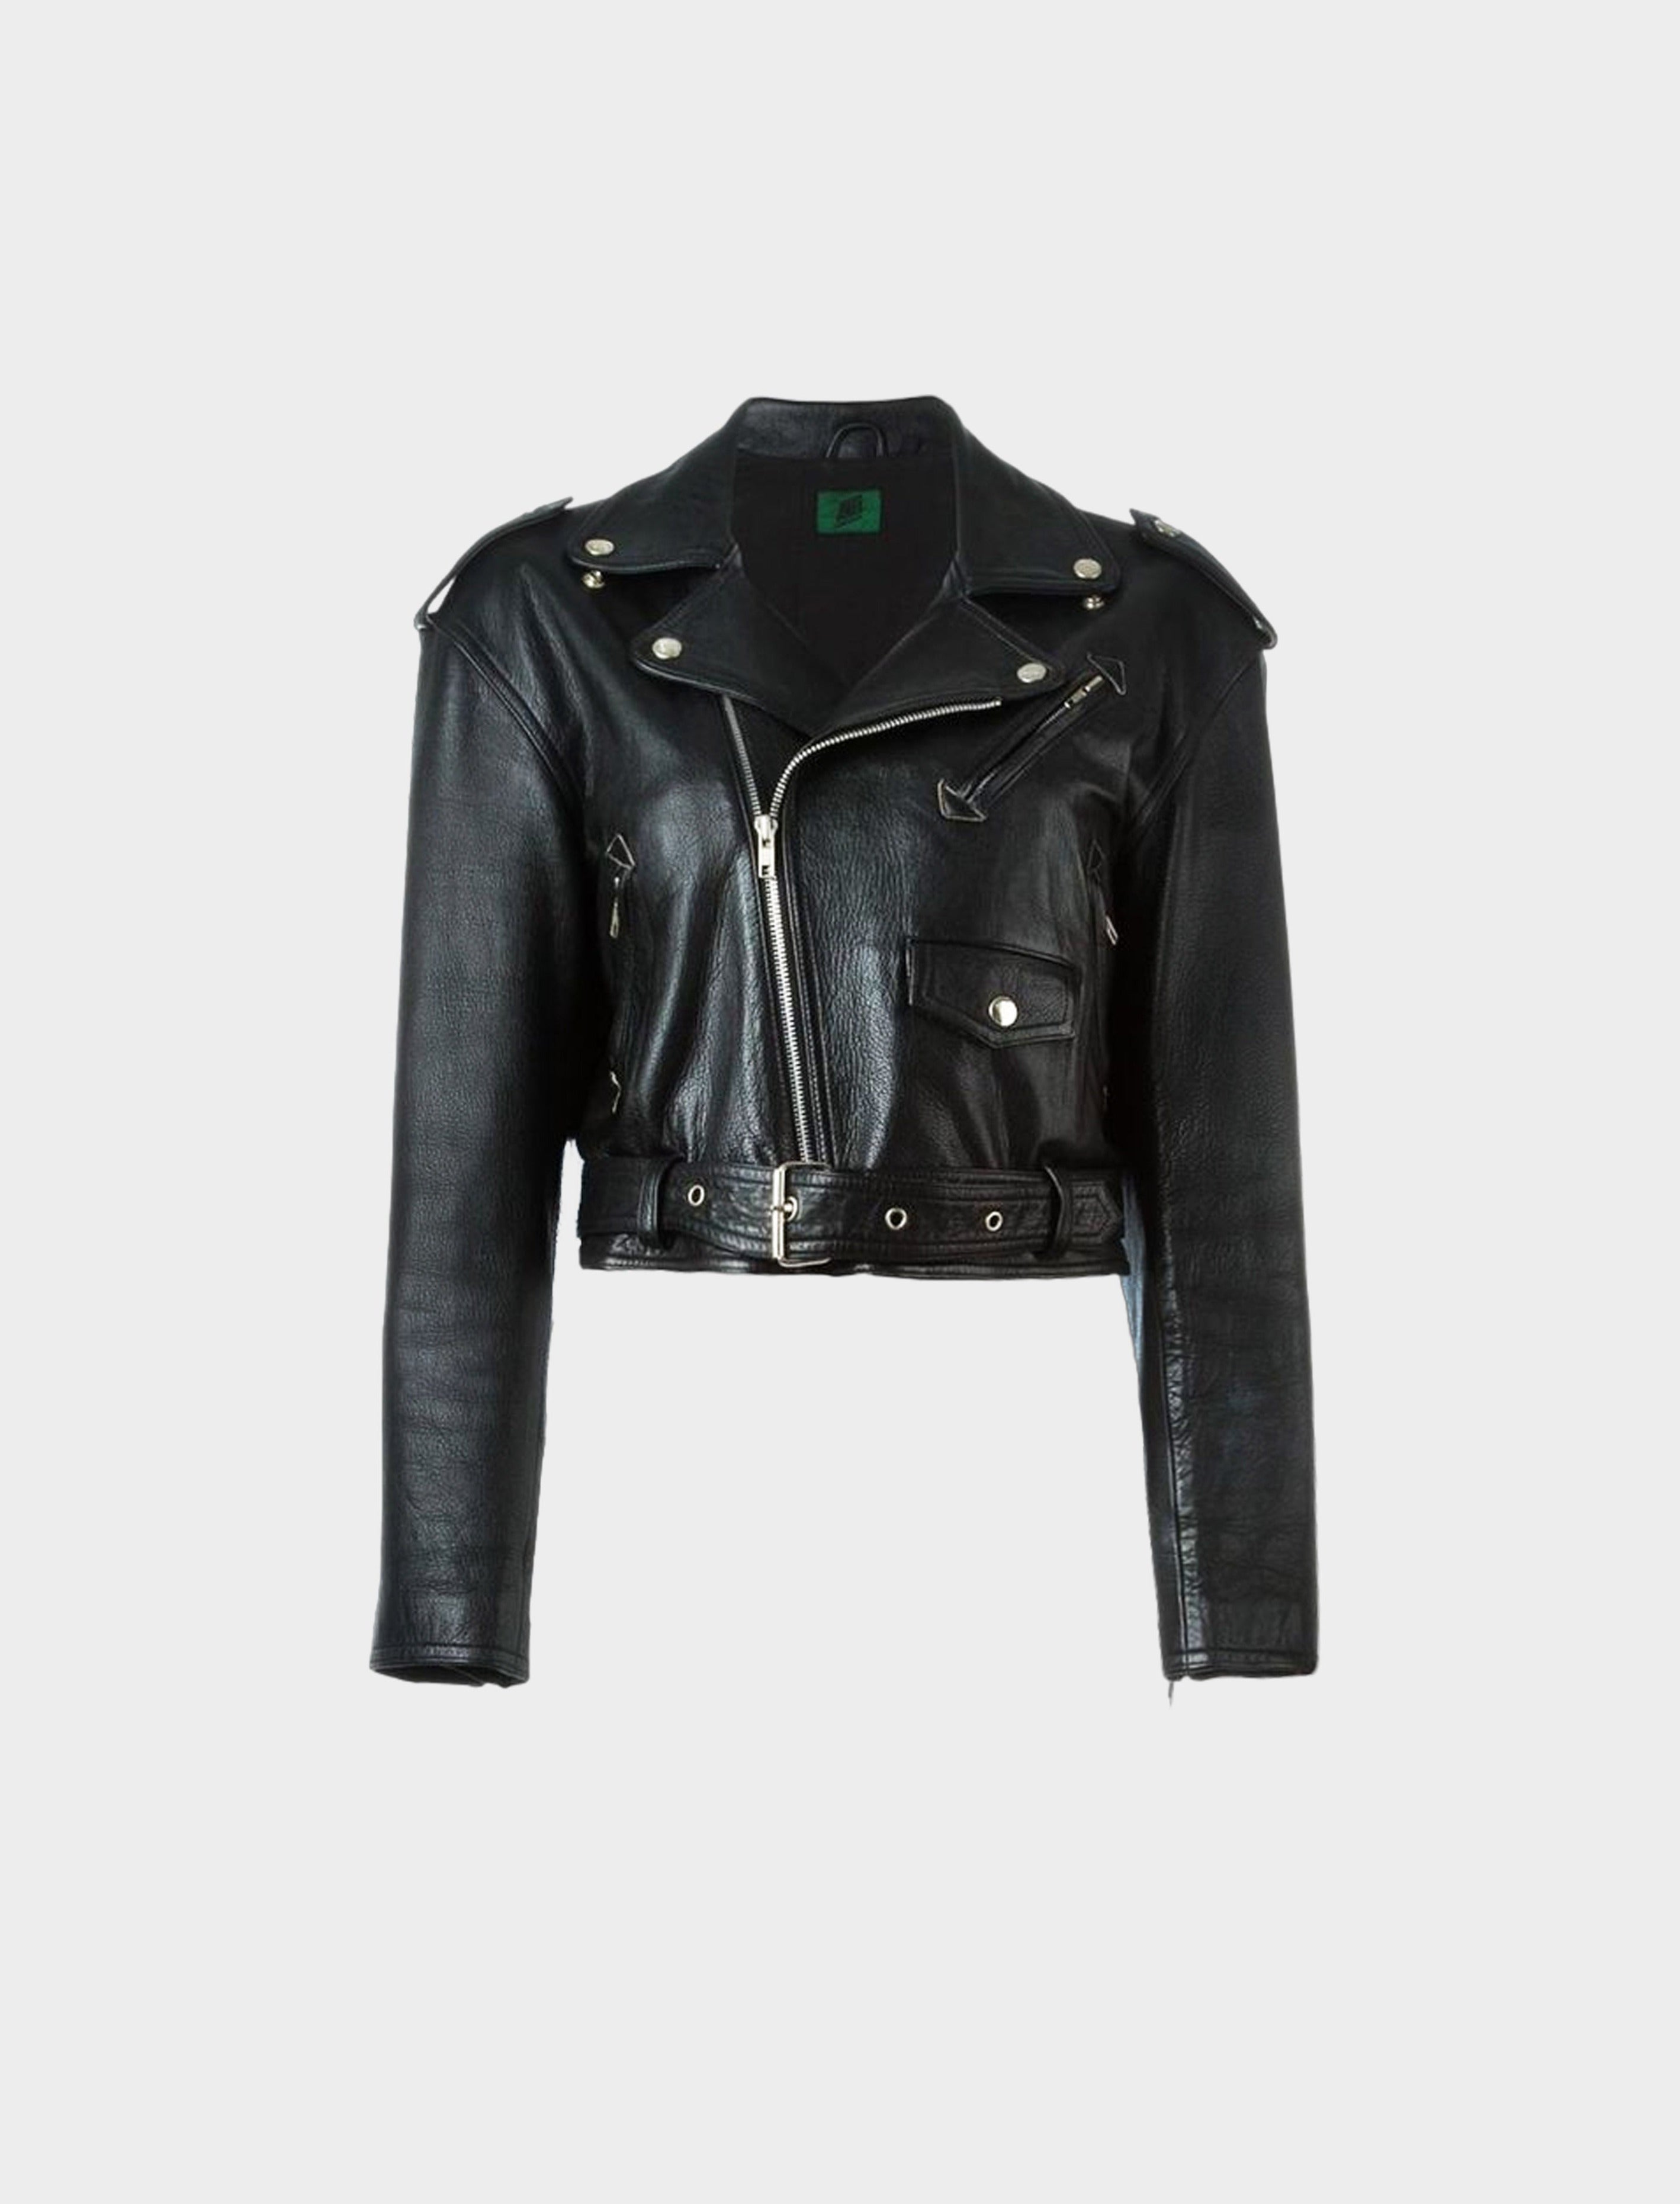 Jean Paul Gaultier 2000s Black Leather Perfecto Cropped Biker Jacket